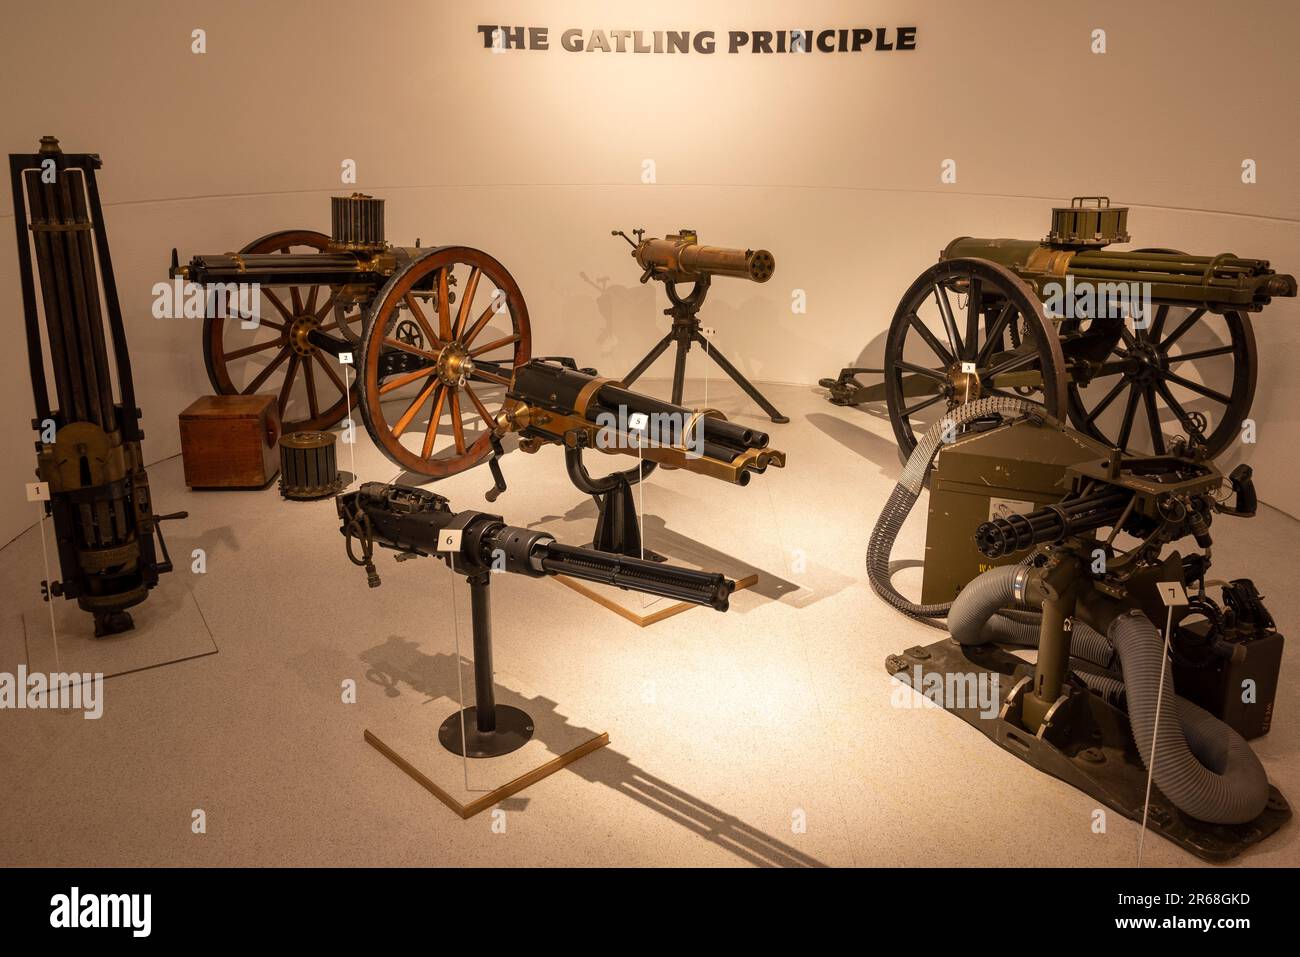 Gatling Gun exhibit of historical weaponry Royal Armouries Museum, Leeds Stock Photo